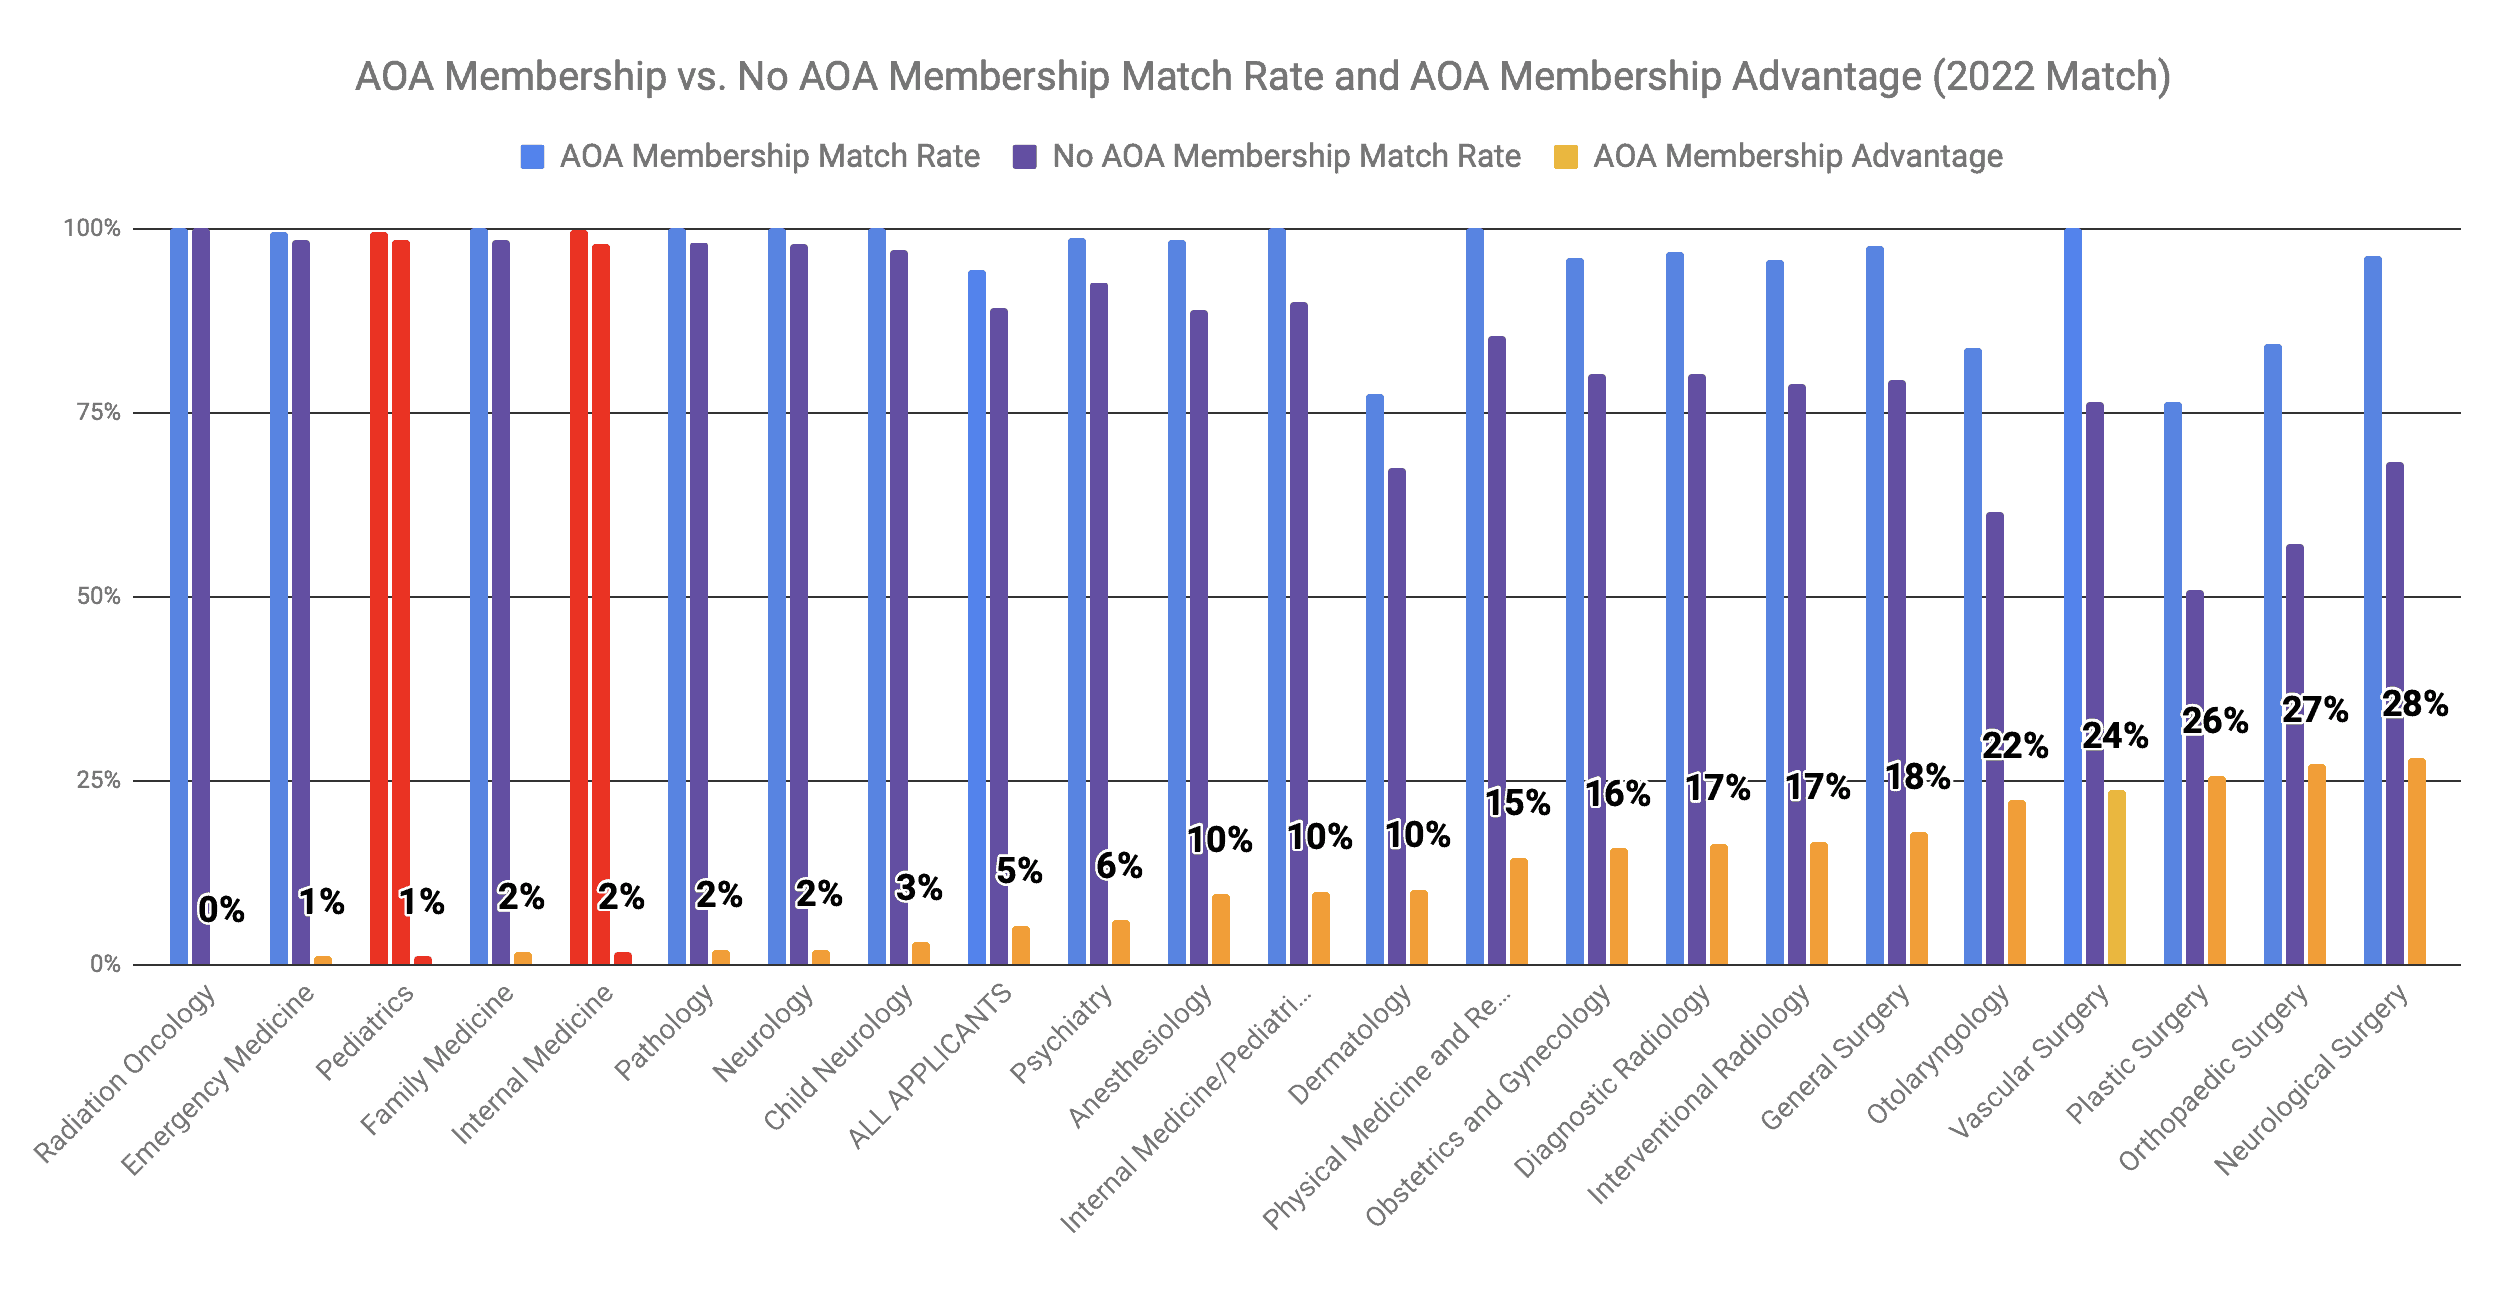 AOA Membership Advantage for Internal Medicine 2022